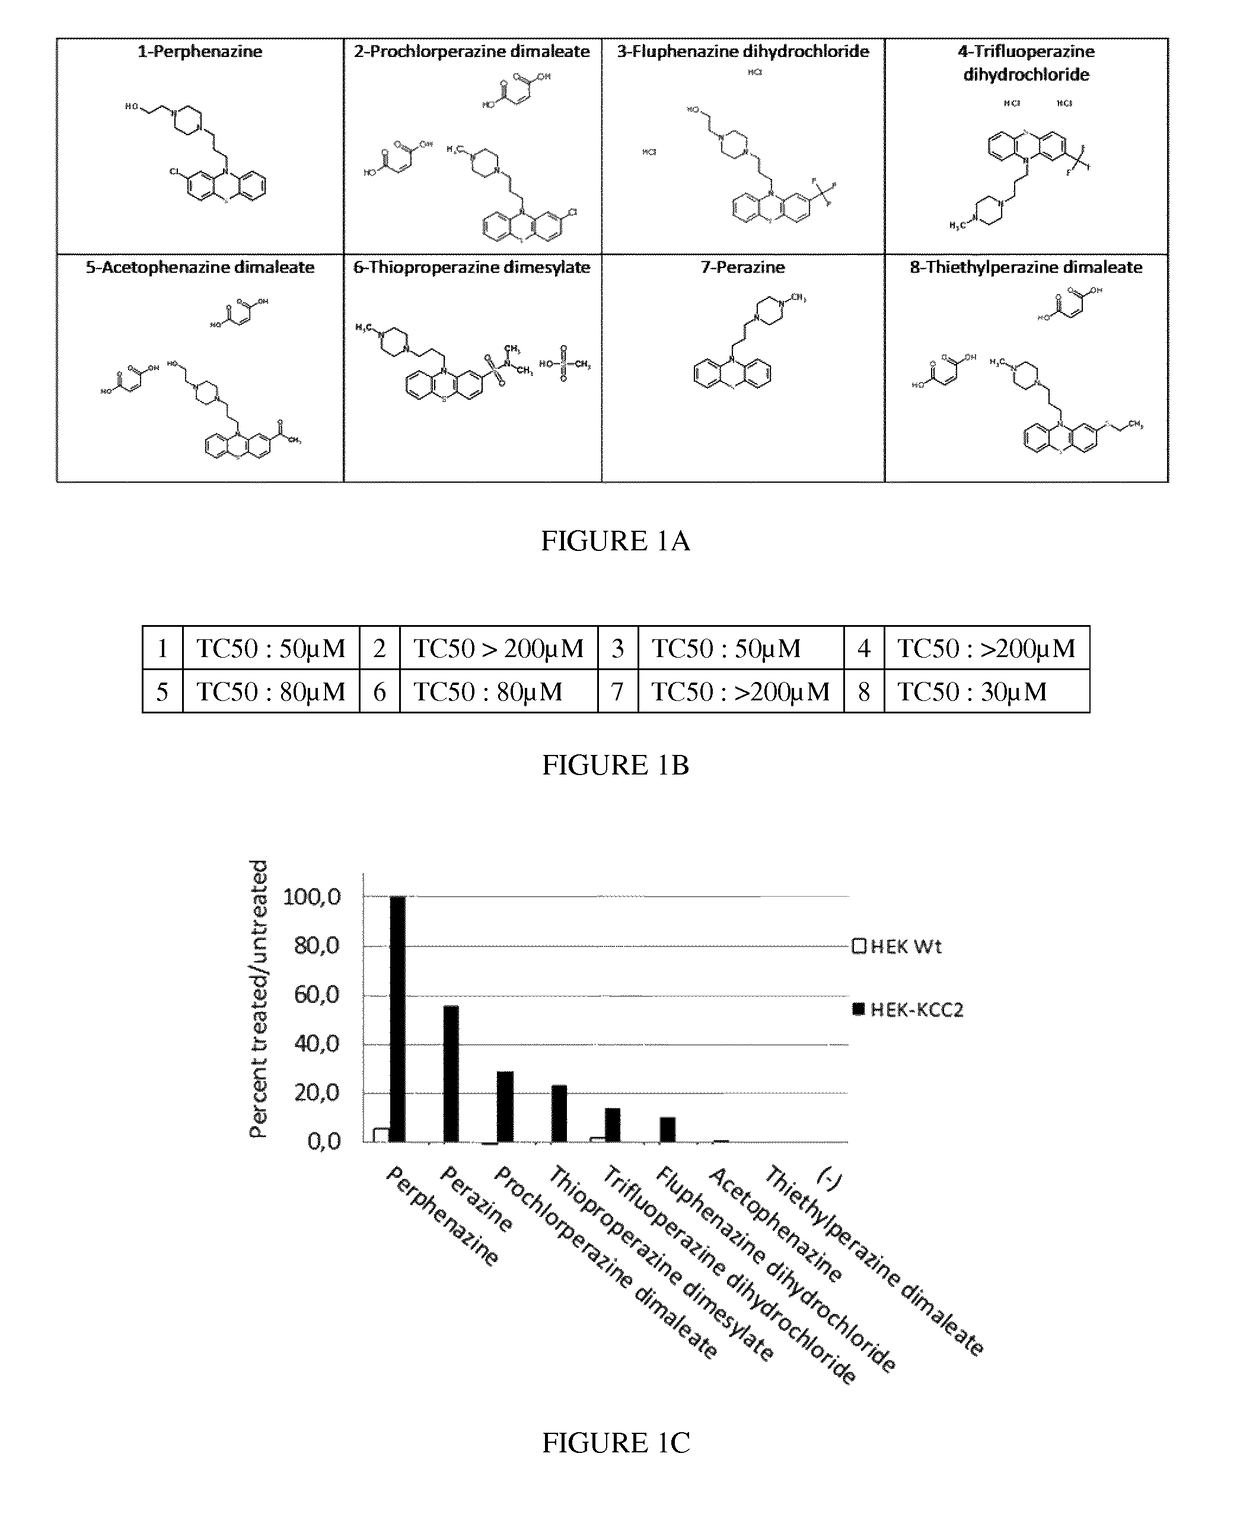 Piperazine phenothiazine derivatives for treating spasticity